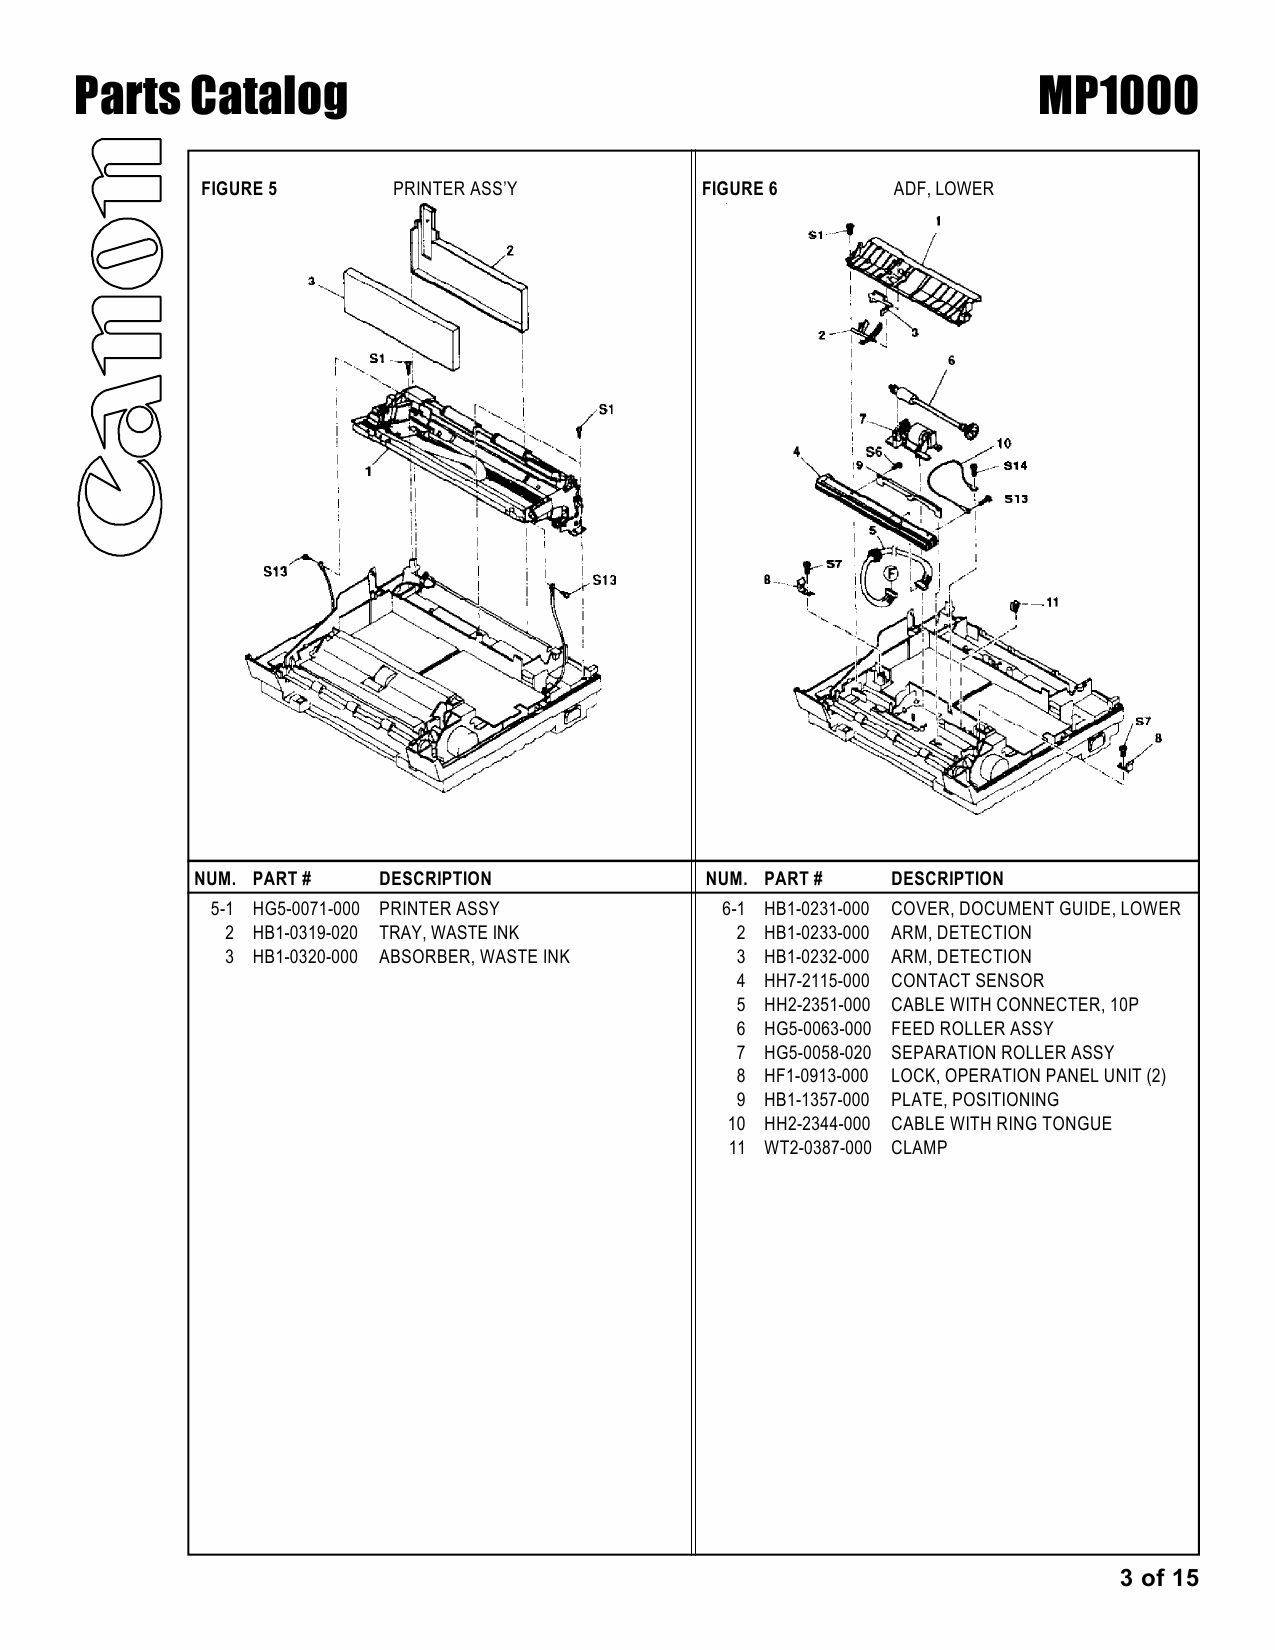 Canon MultiPASS MP-1000 Parts Catalog Manual-3